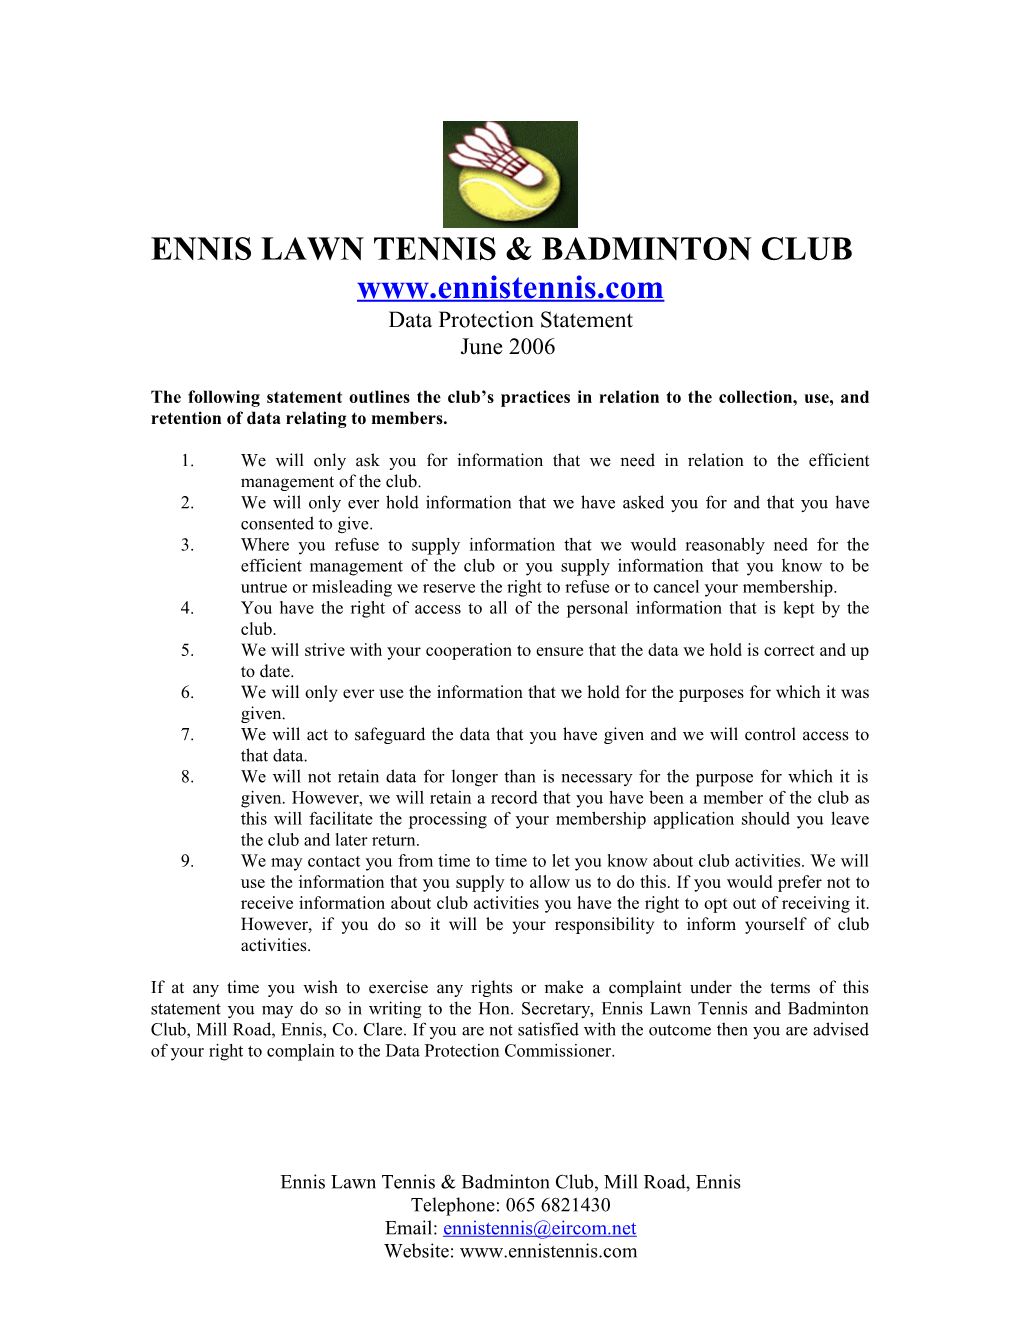 Ennis Lawn Tennis & Badminton Club